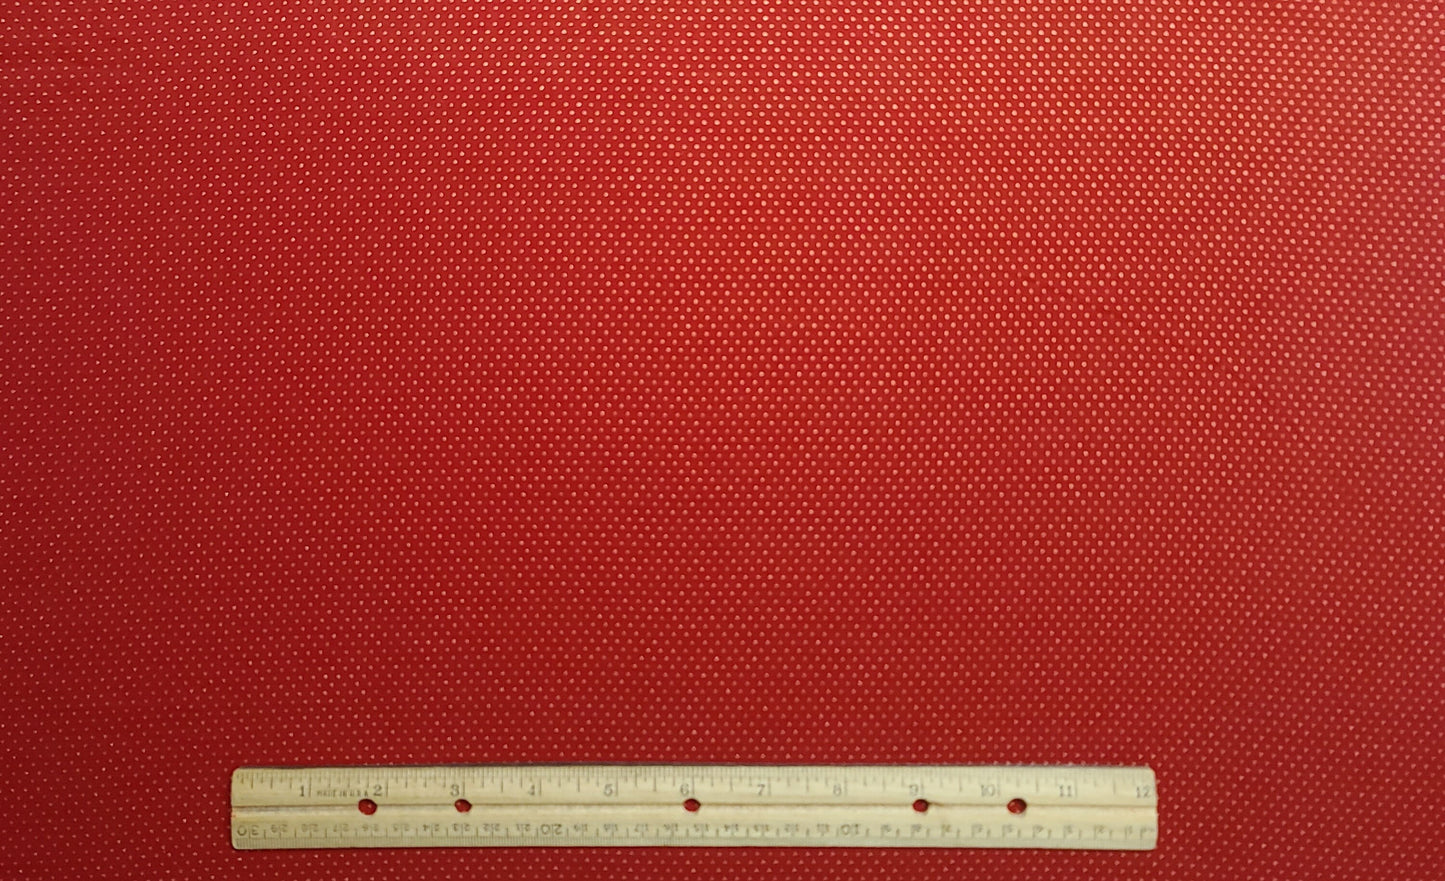 EOB - Red Fabric / Gold Metallic Pin Dot Print - Selvage to Selvage Print.